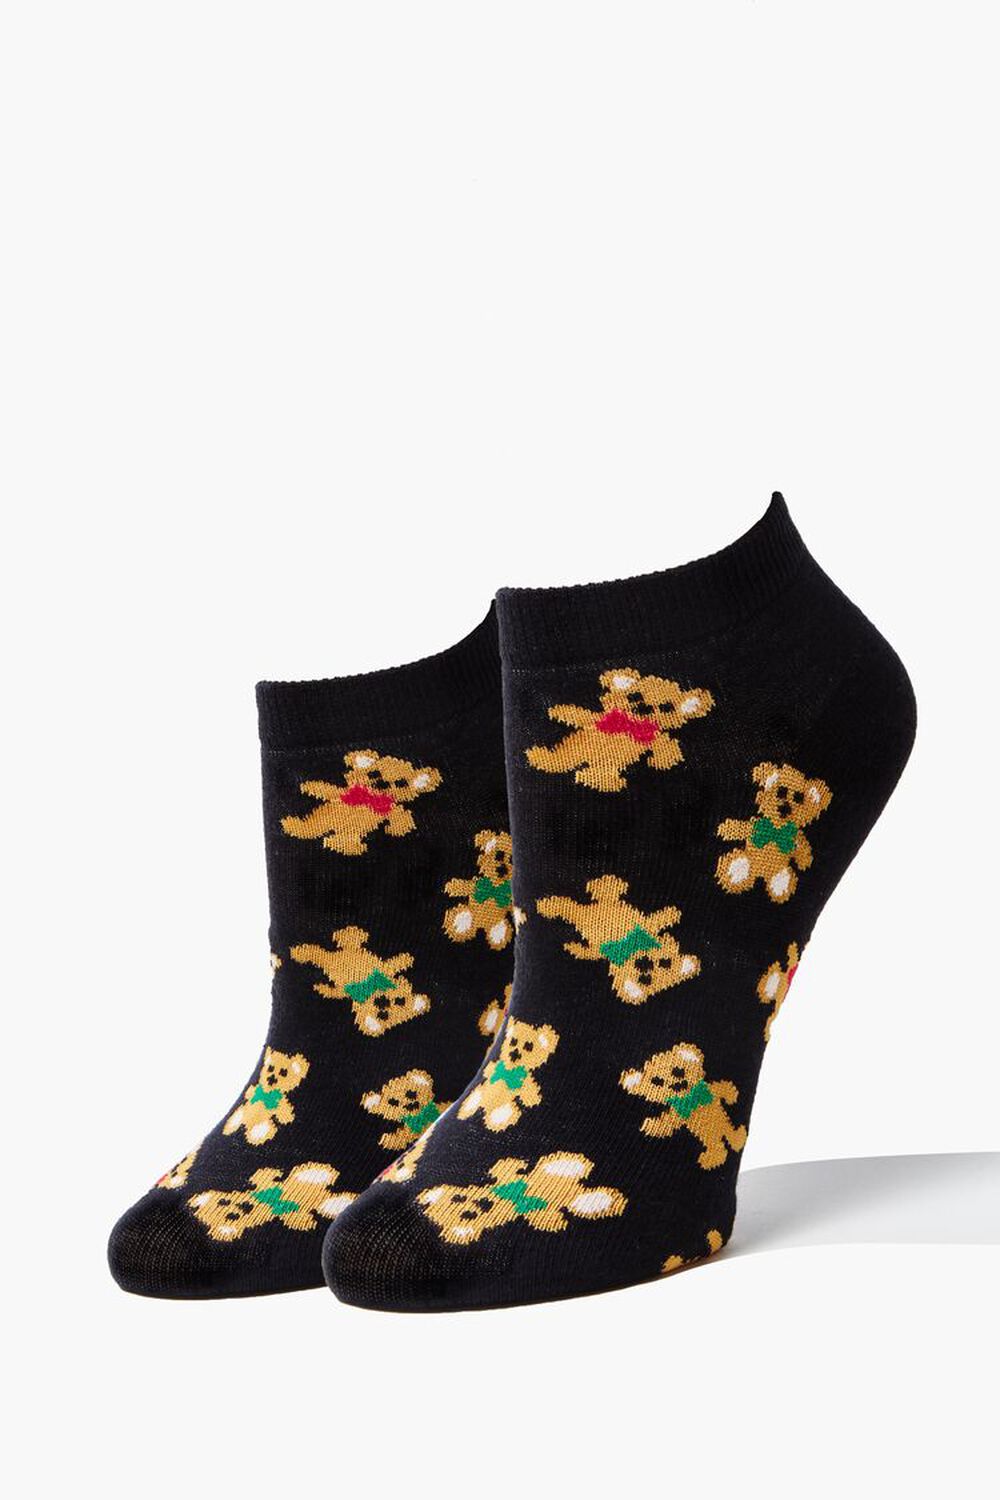 BLACK/MULTI Teddy Bear Ankle Socks, image 1